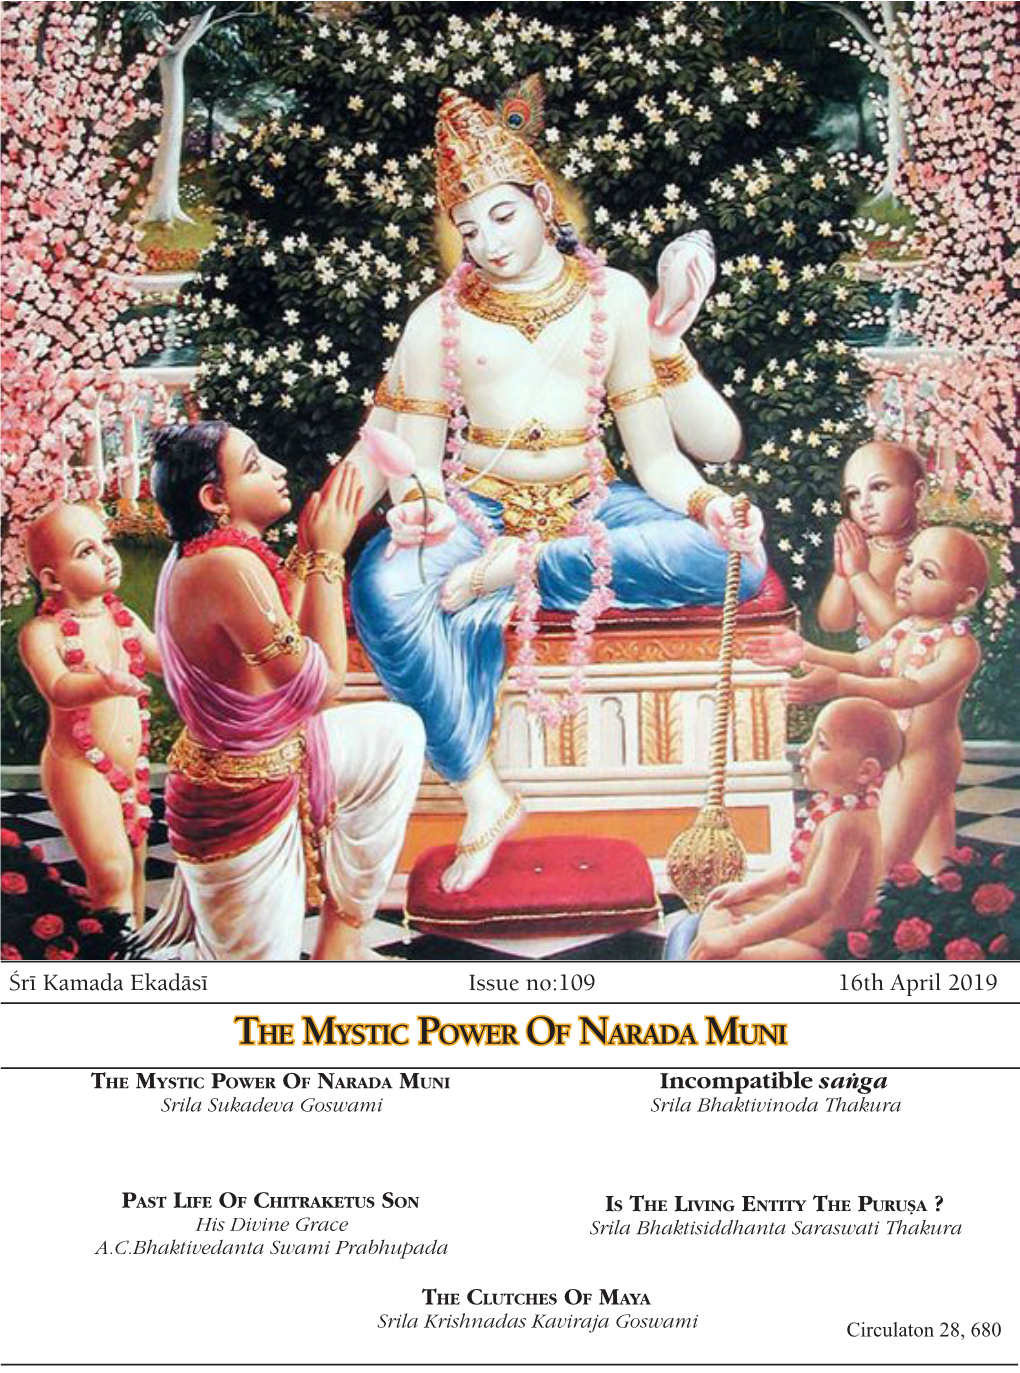 The Mystic Power of Narada Muni